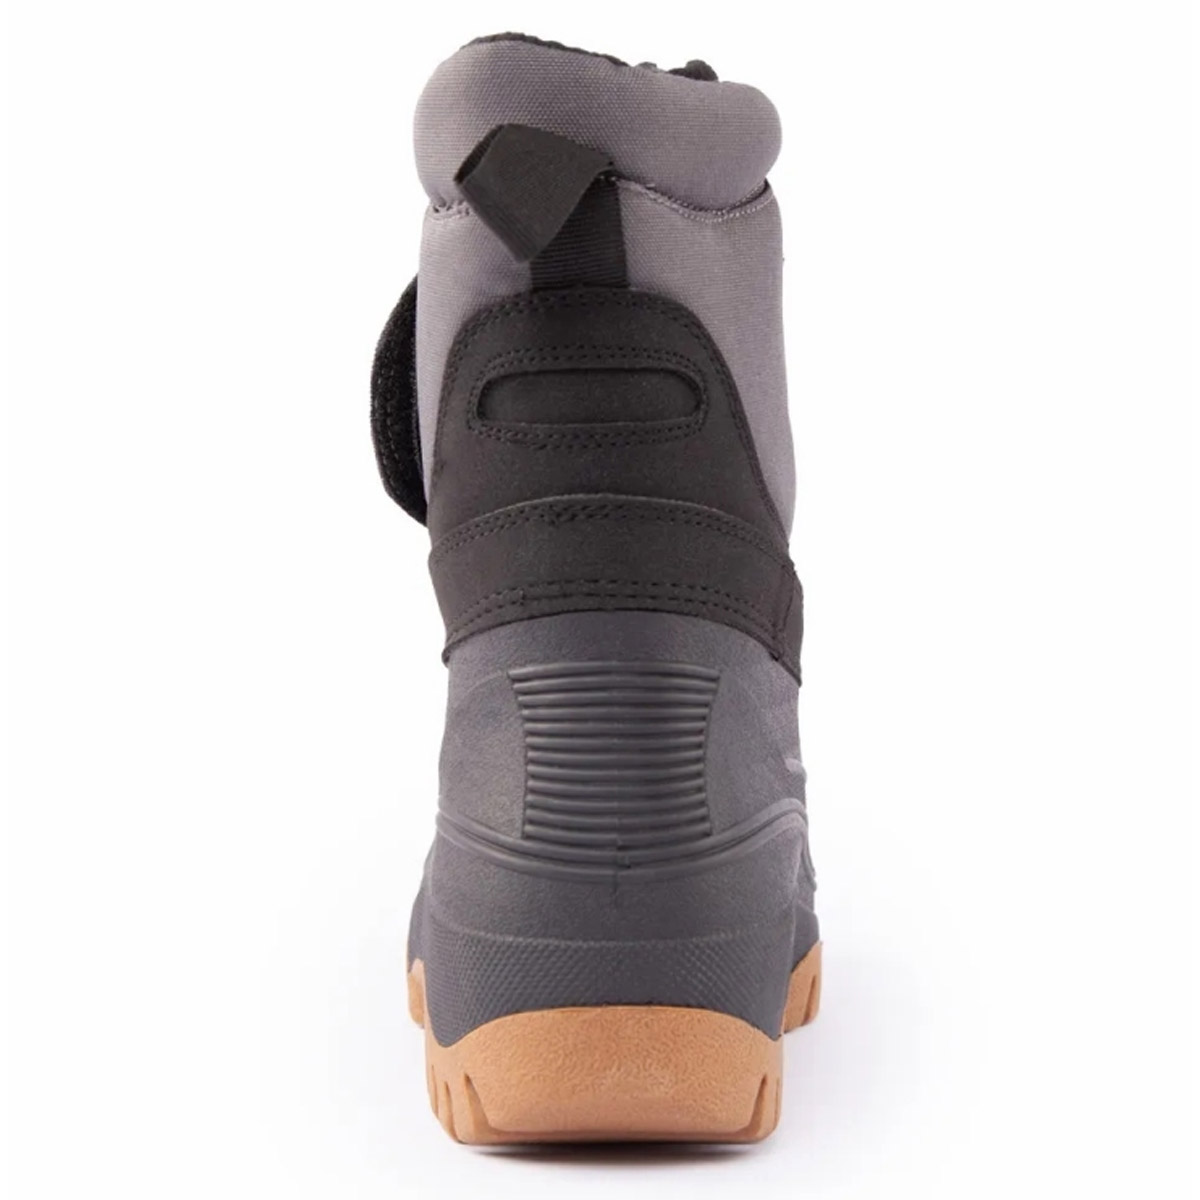 Axia Velcro Boots